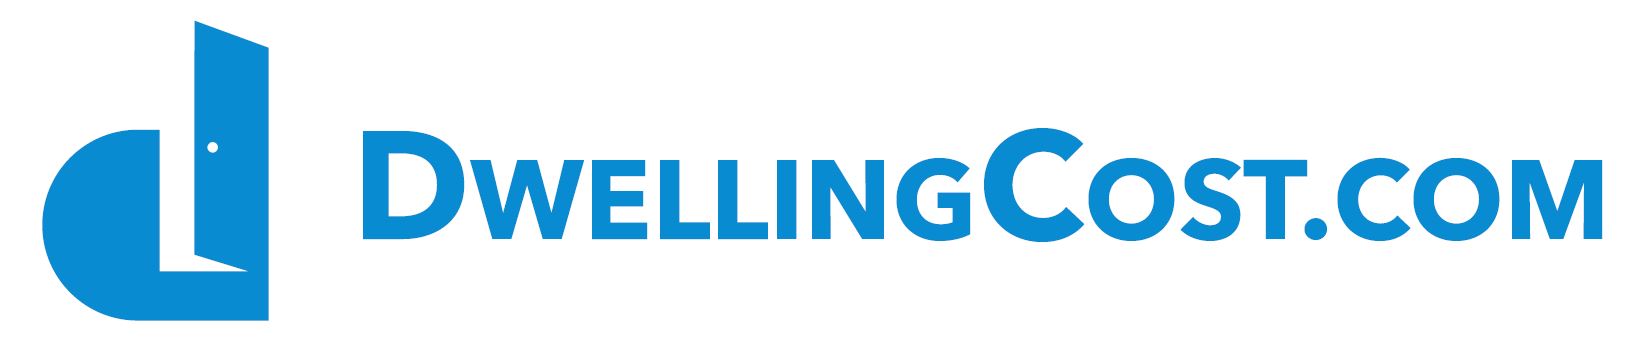 DwellingCost.com Logo